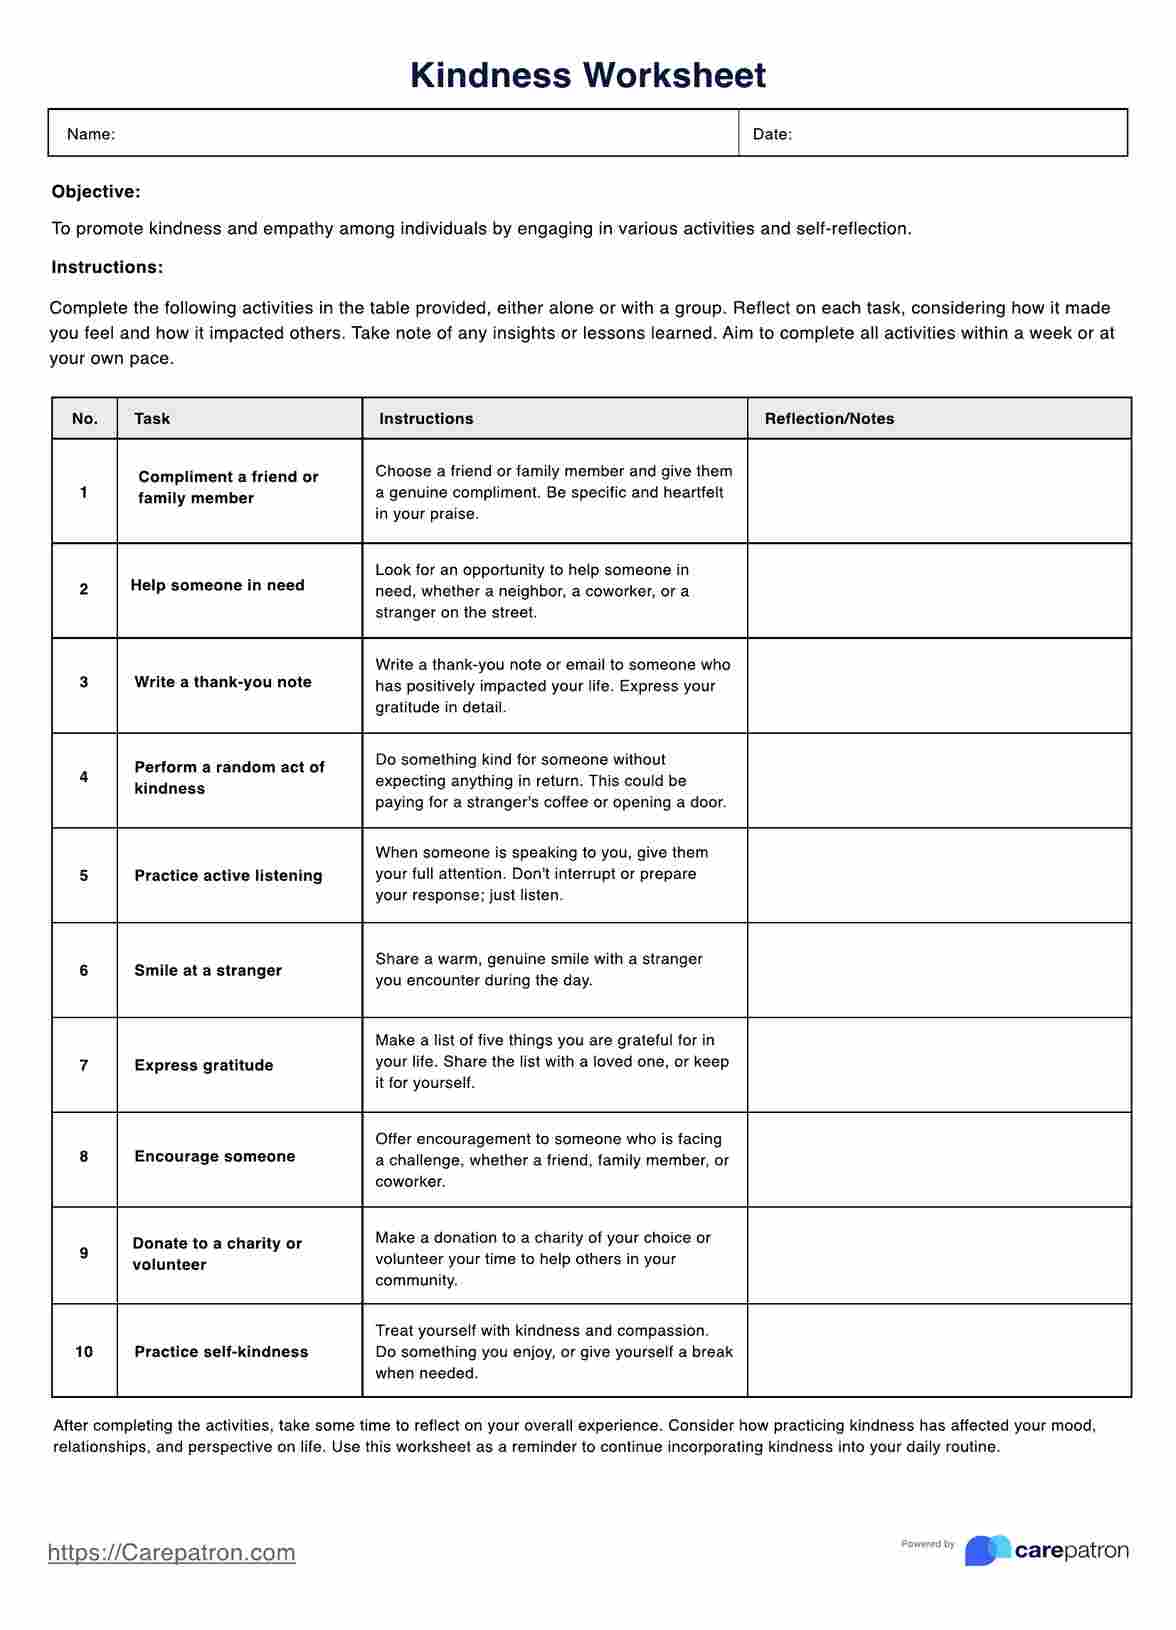 Kindness Worksheet PDF Example